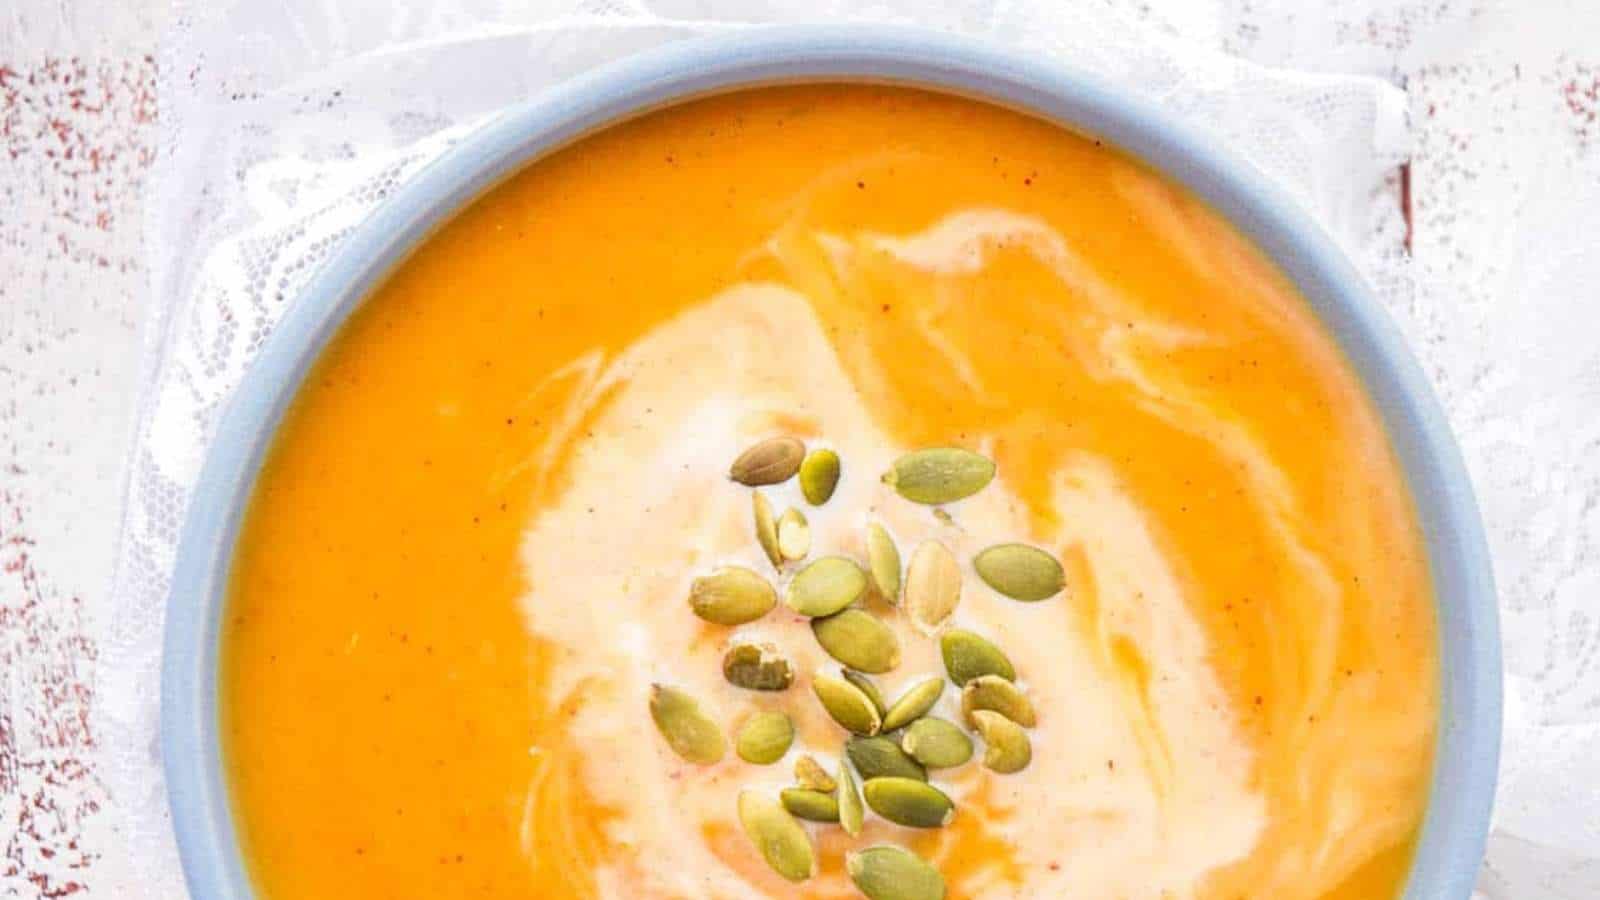 A bowl of pumpkin soup with pumpkin seeds on top.